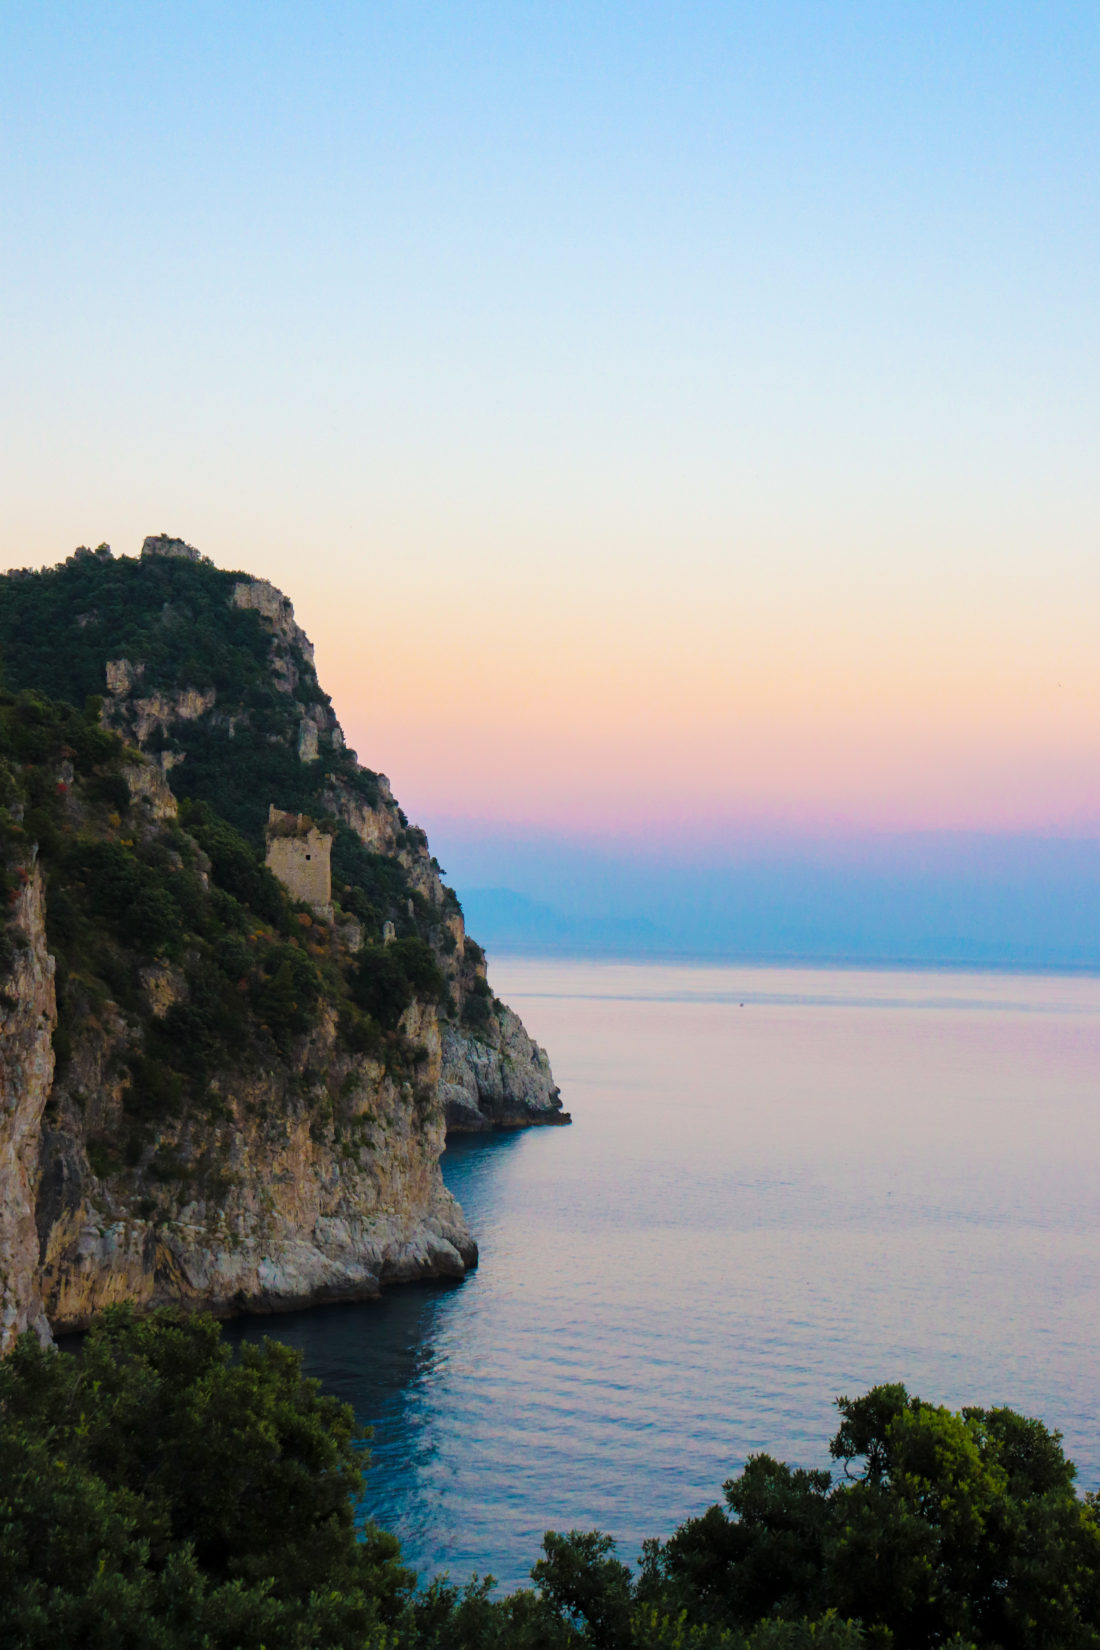 The Amalfi Coast shot by Eva Amurri Martino